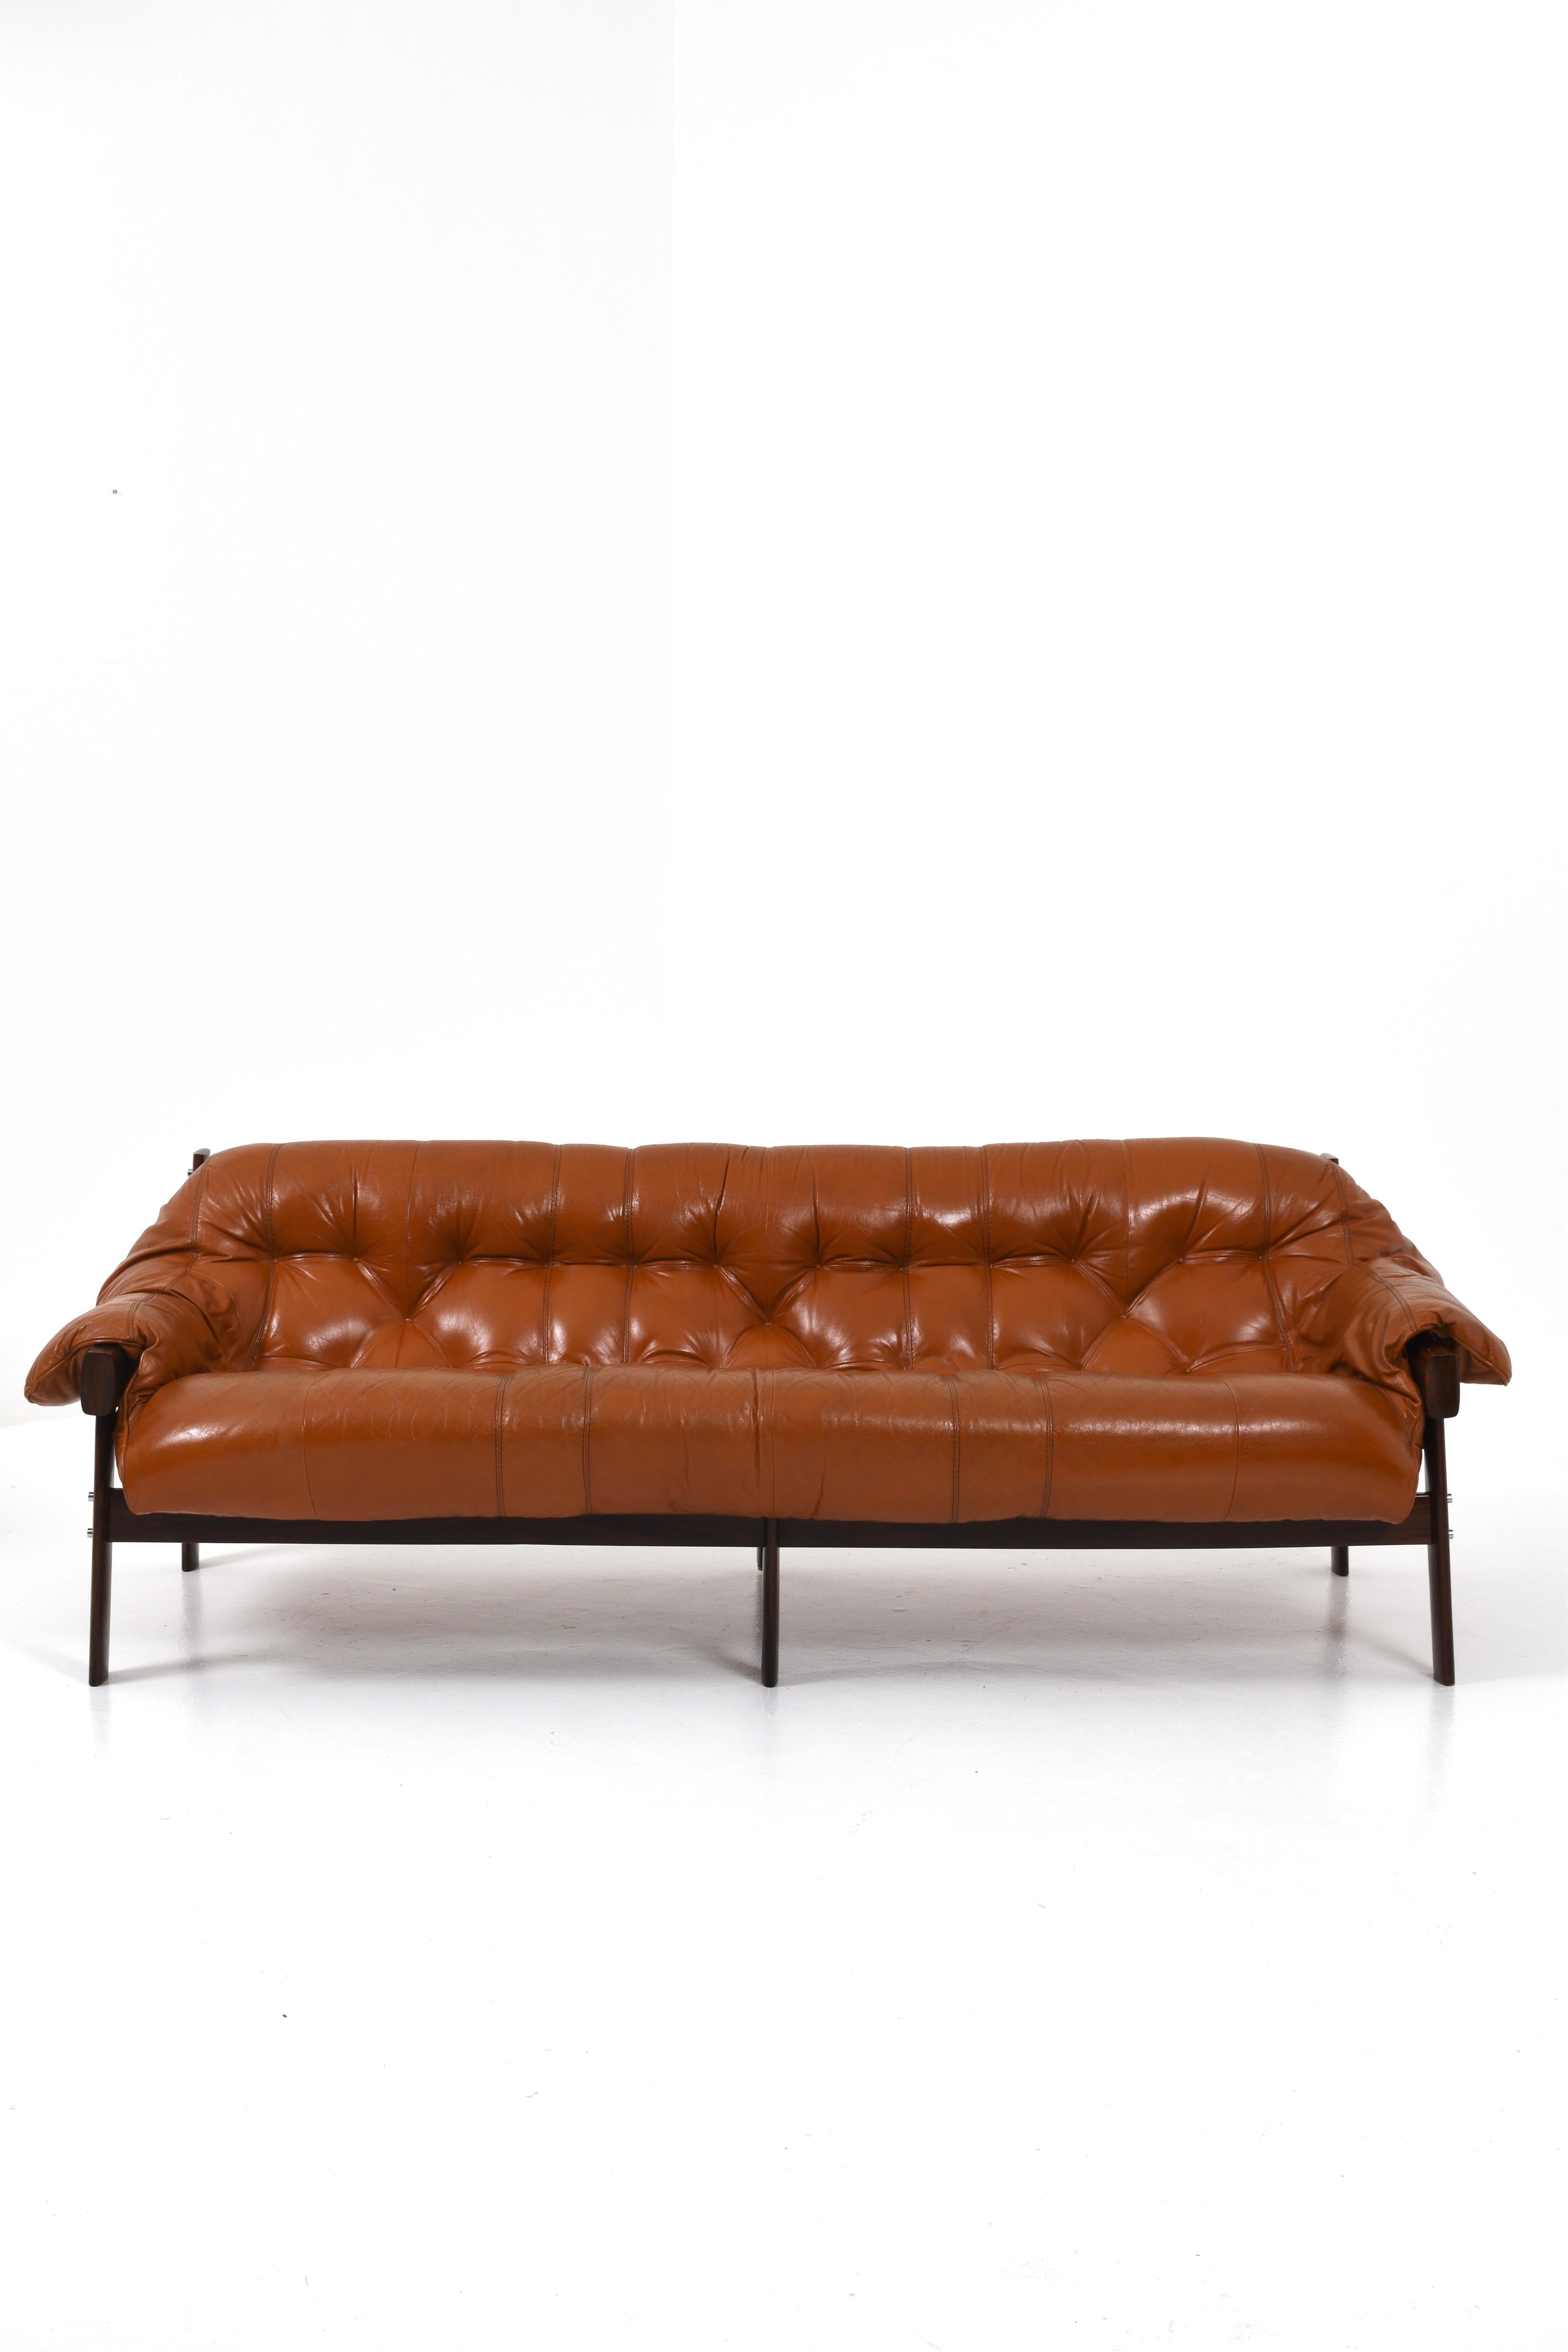 Percival Lafer MP-41 sofa in cognac leather, Brazil 1970s 8